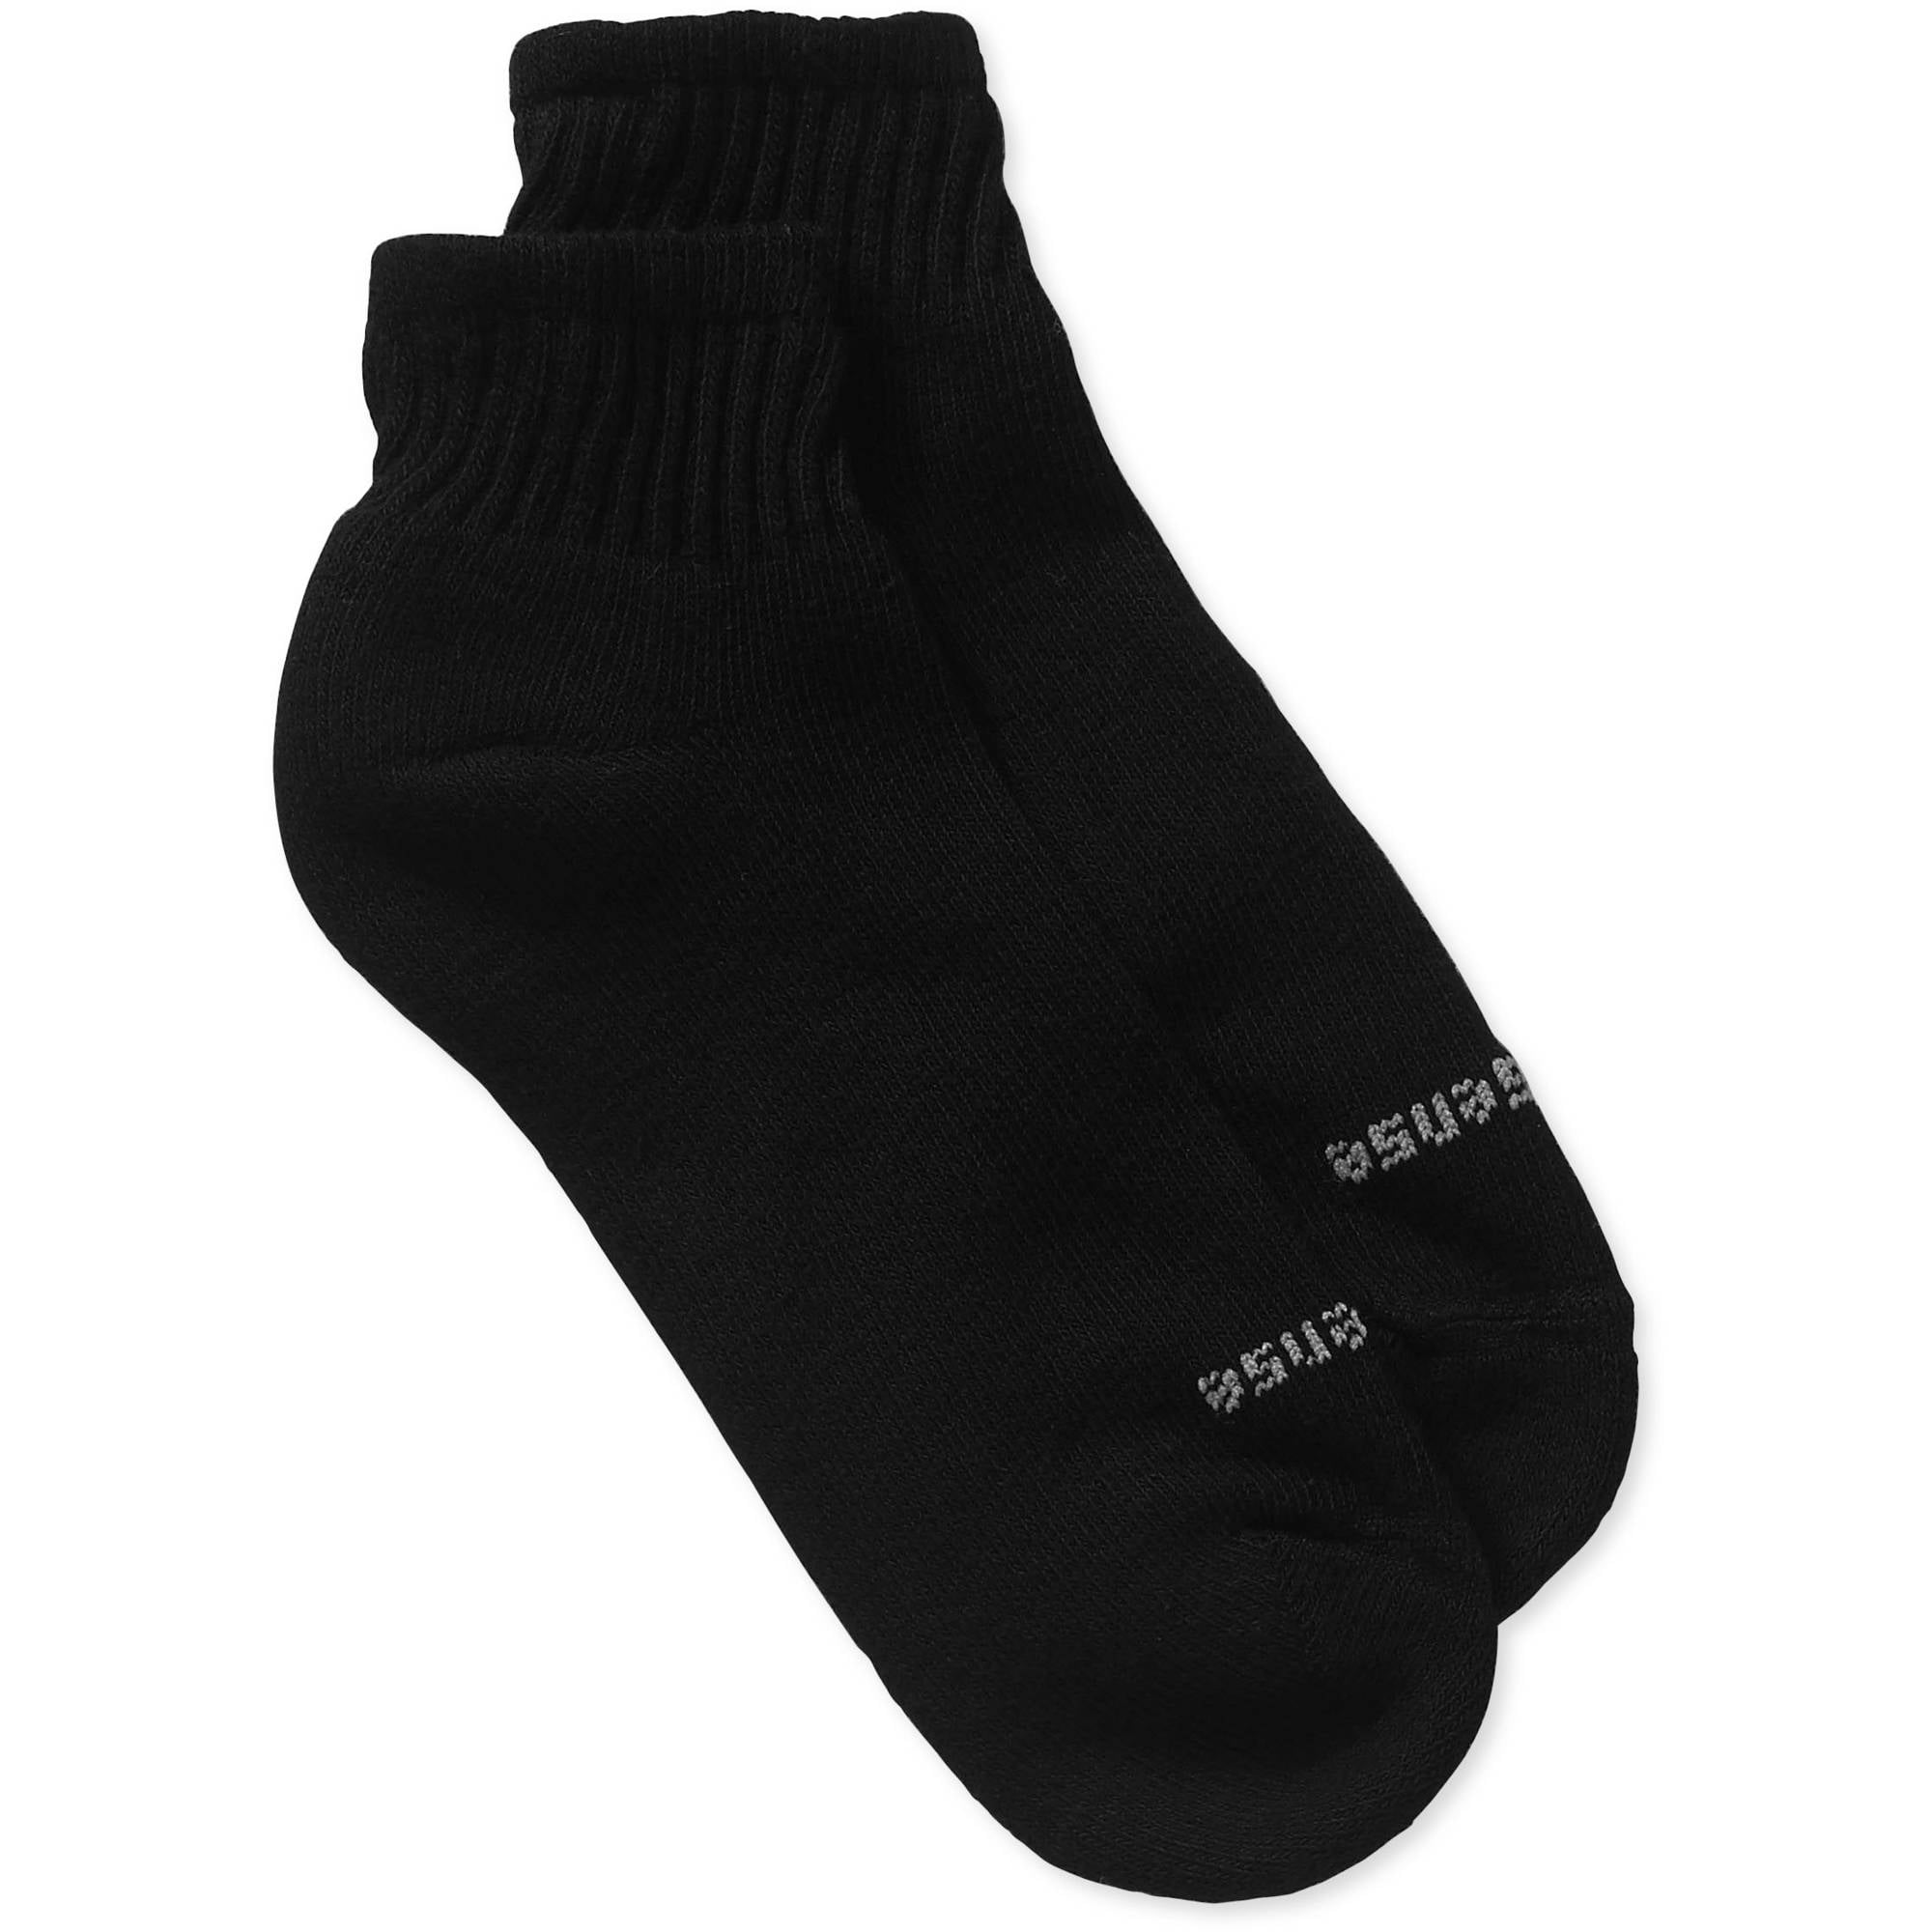 Women's Soft and Sensible Ankle Socks, 6pk - Walmart.com